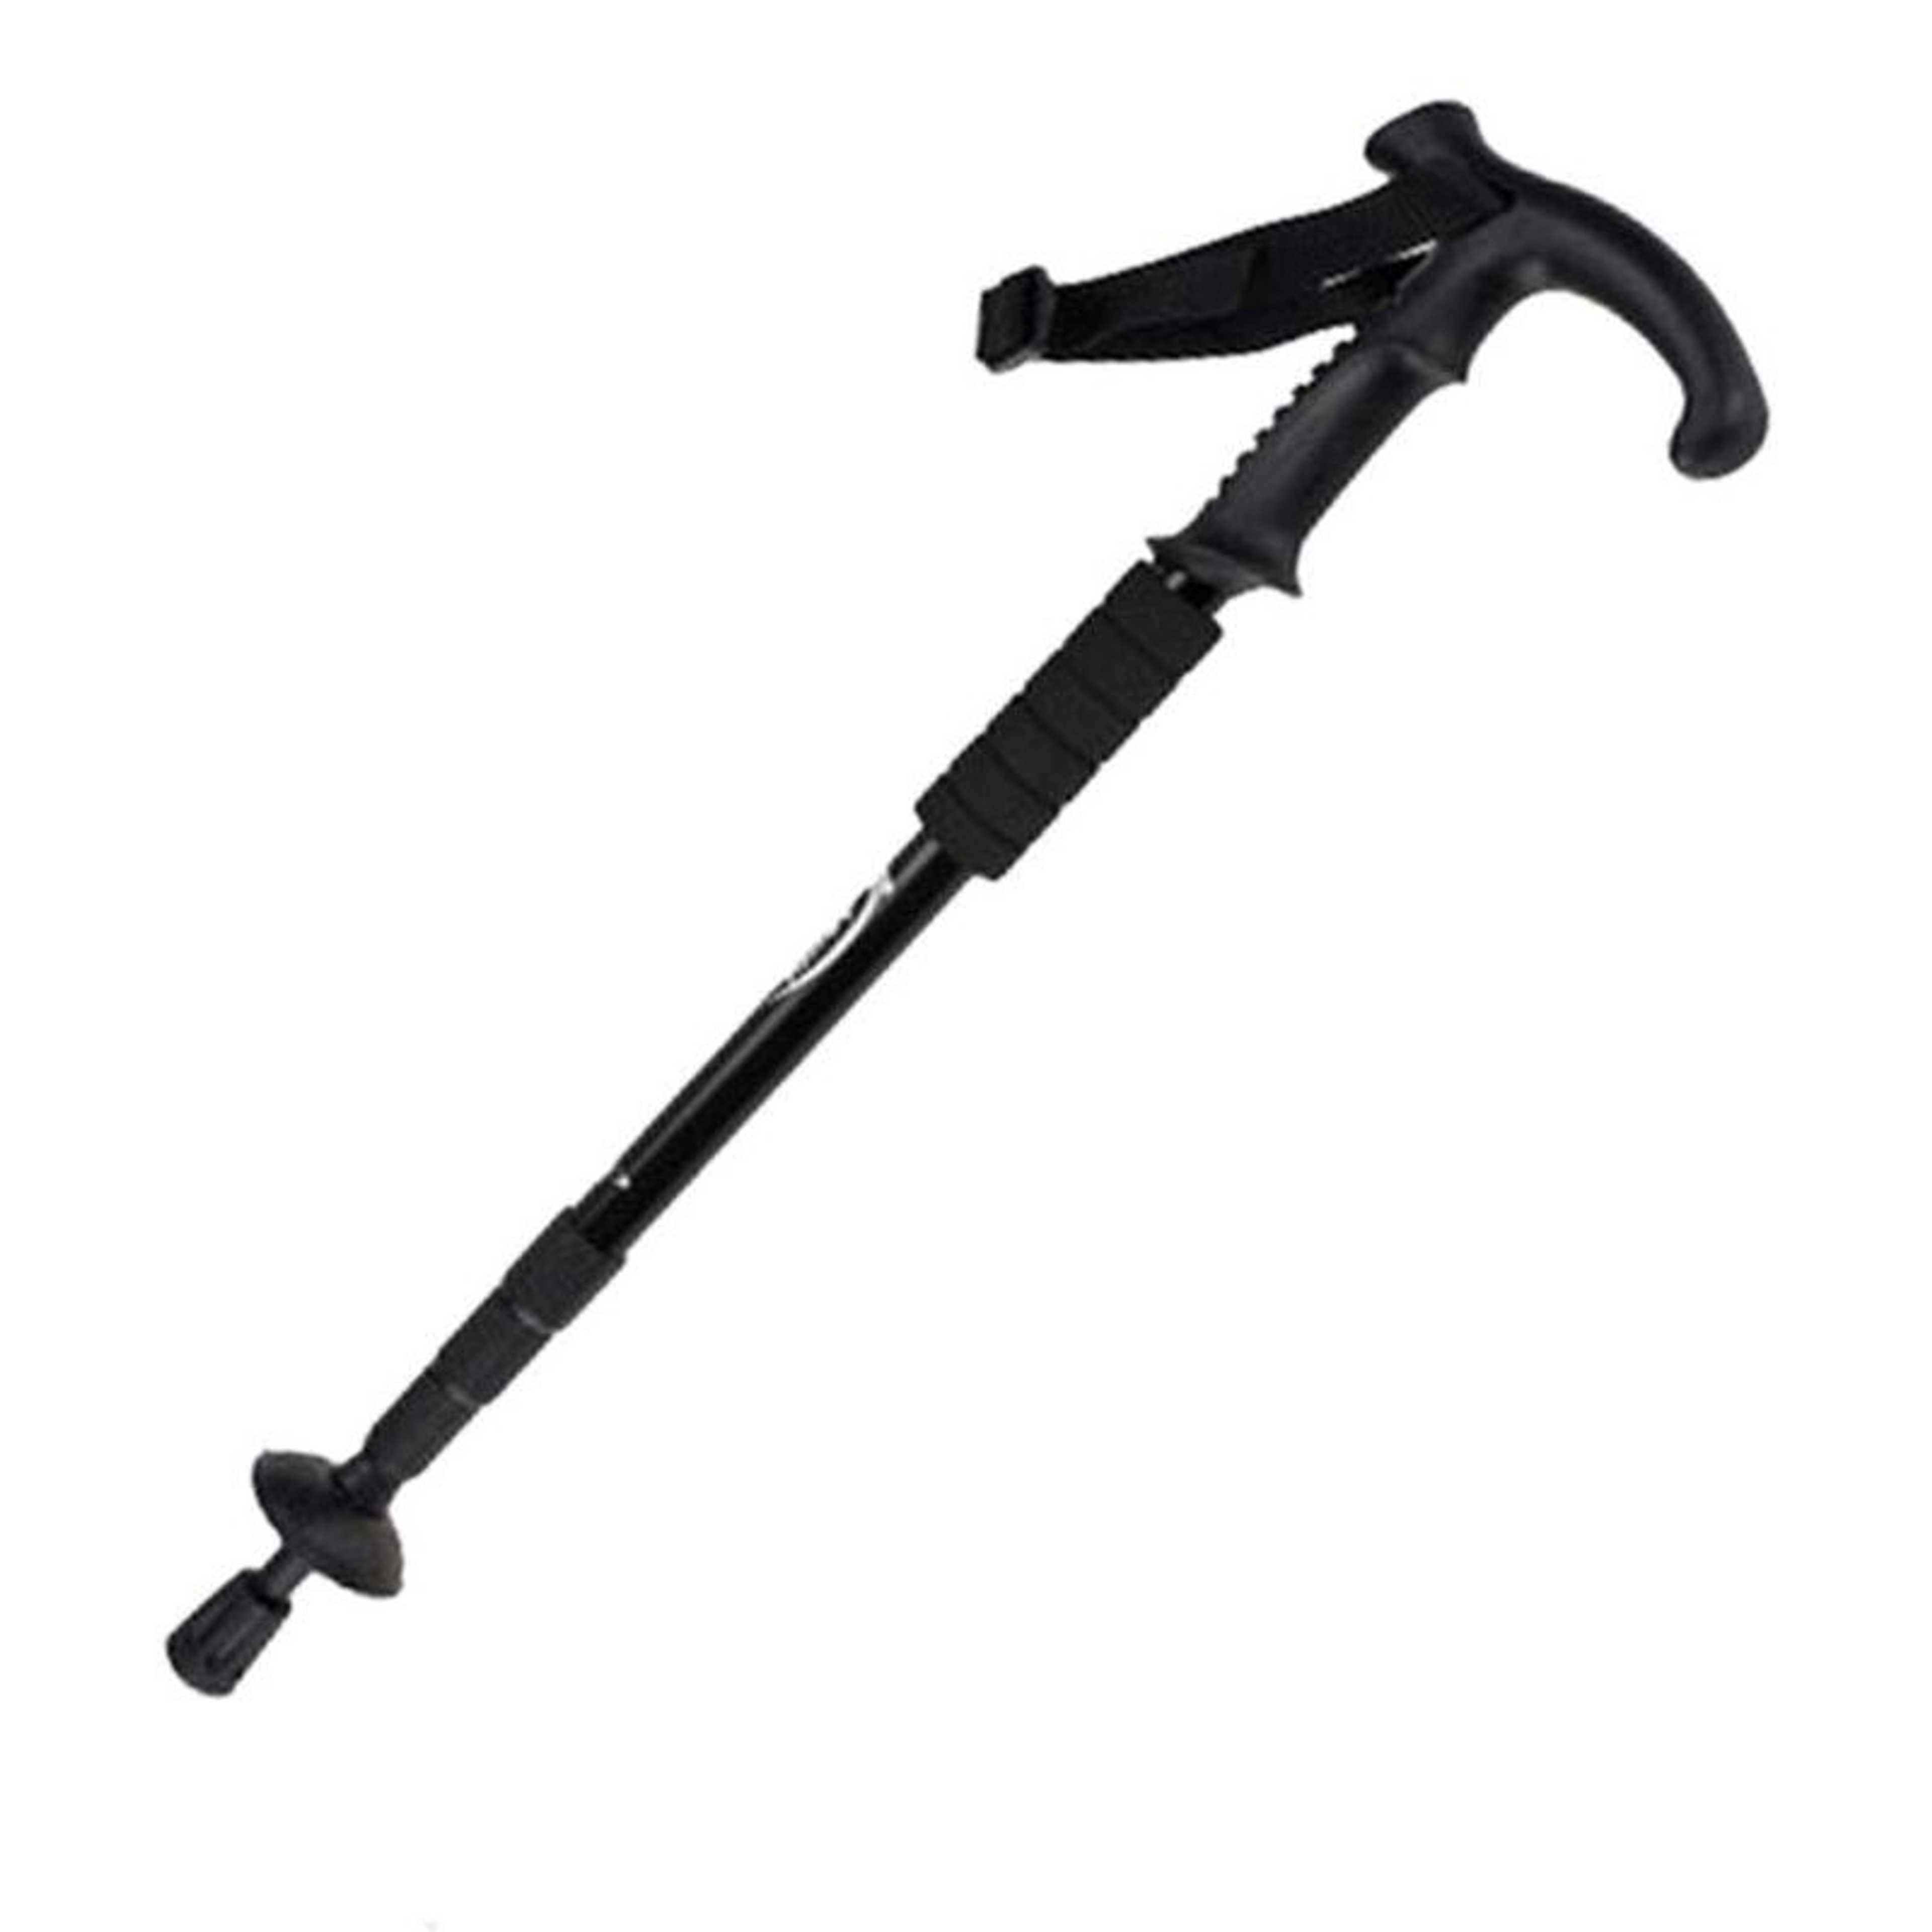 1 Pcs Outdoor Walking Cane Telescopic Adjustable Walking Stick T Handle Trekking Hiking Pole for Men and Women